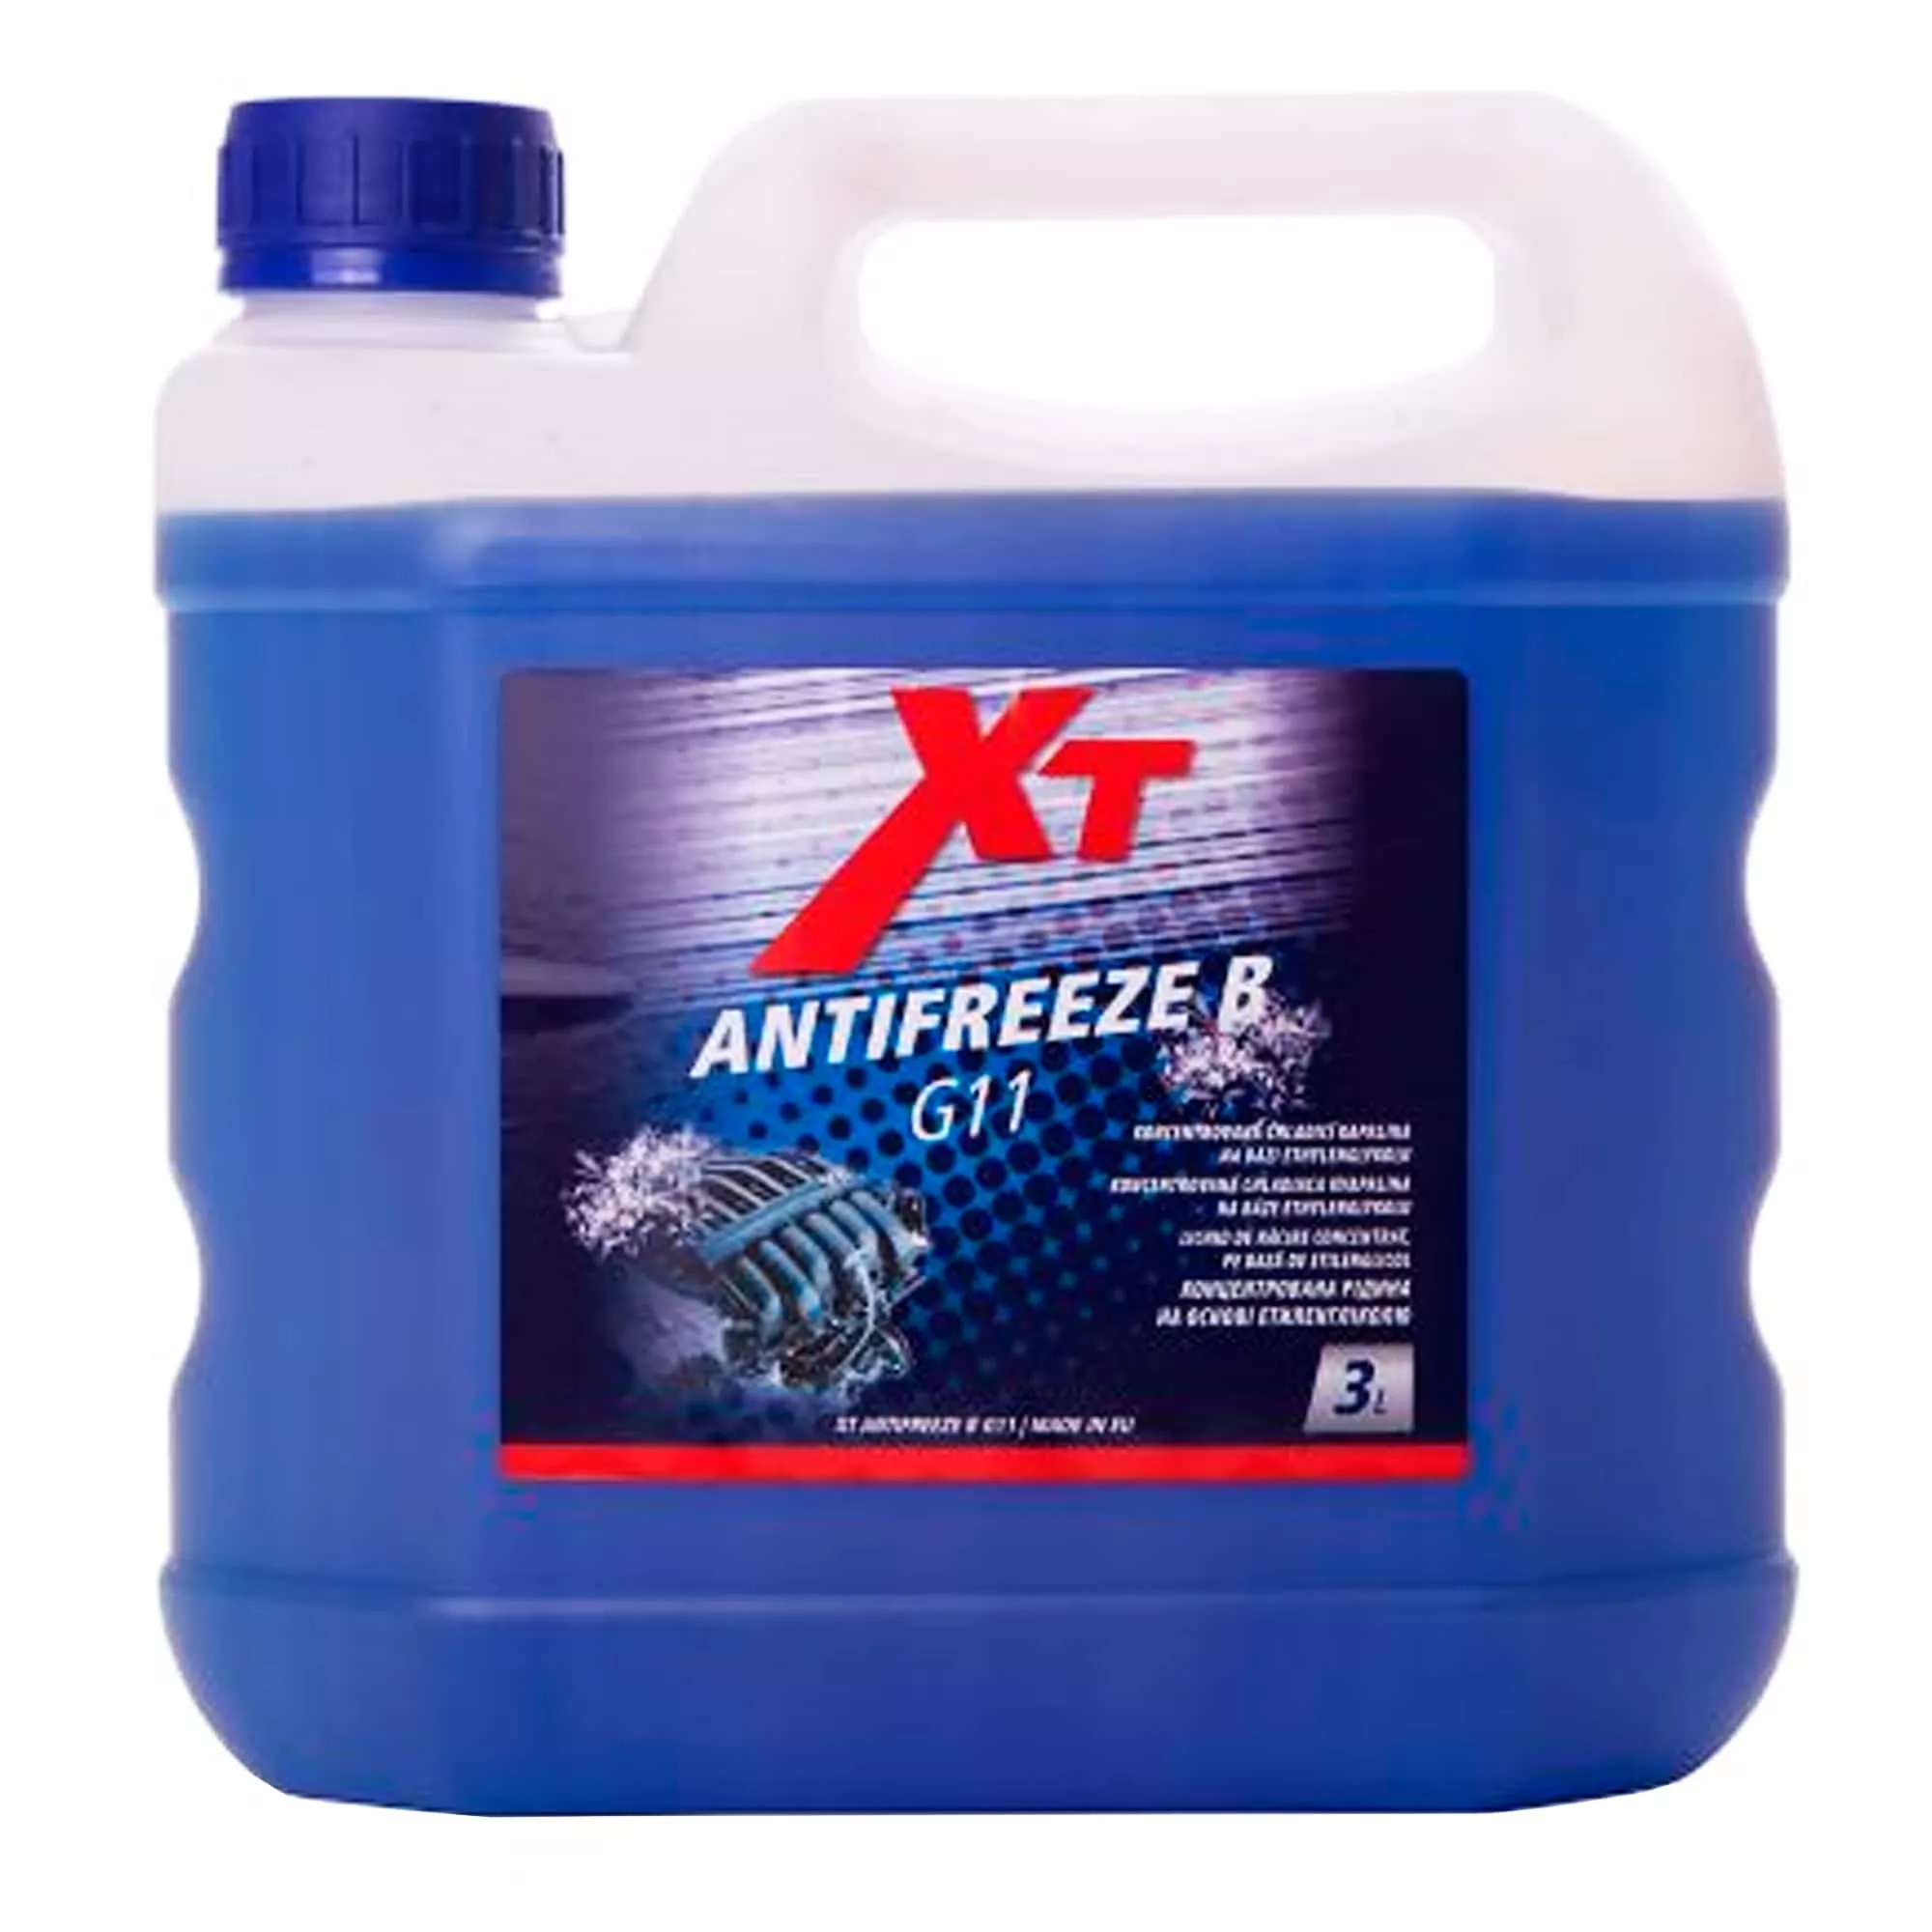 Антифриз XT G11 -38°C синий 3л (XT ANTIFREEZE B 3L)